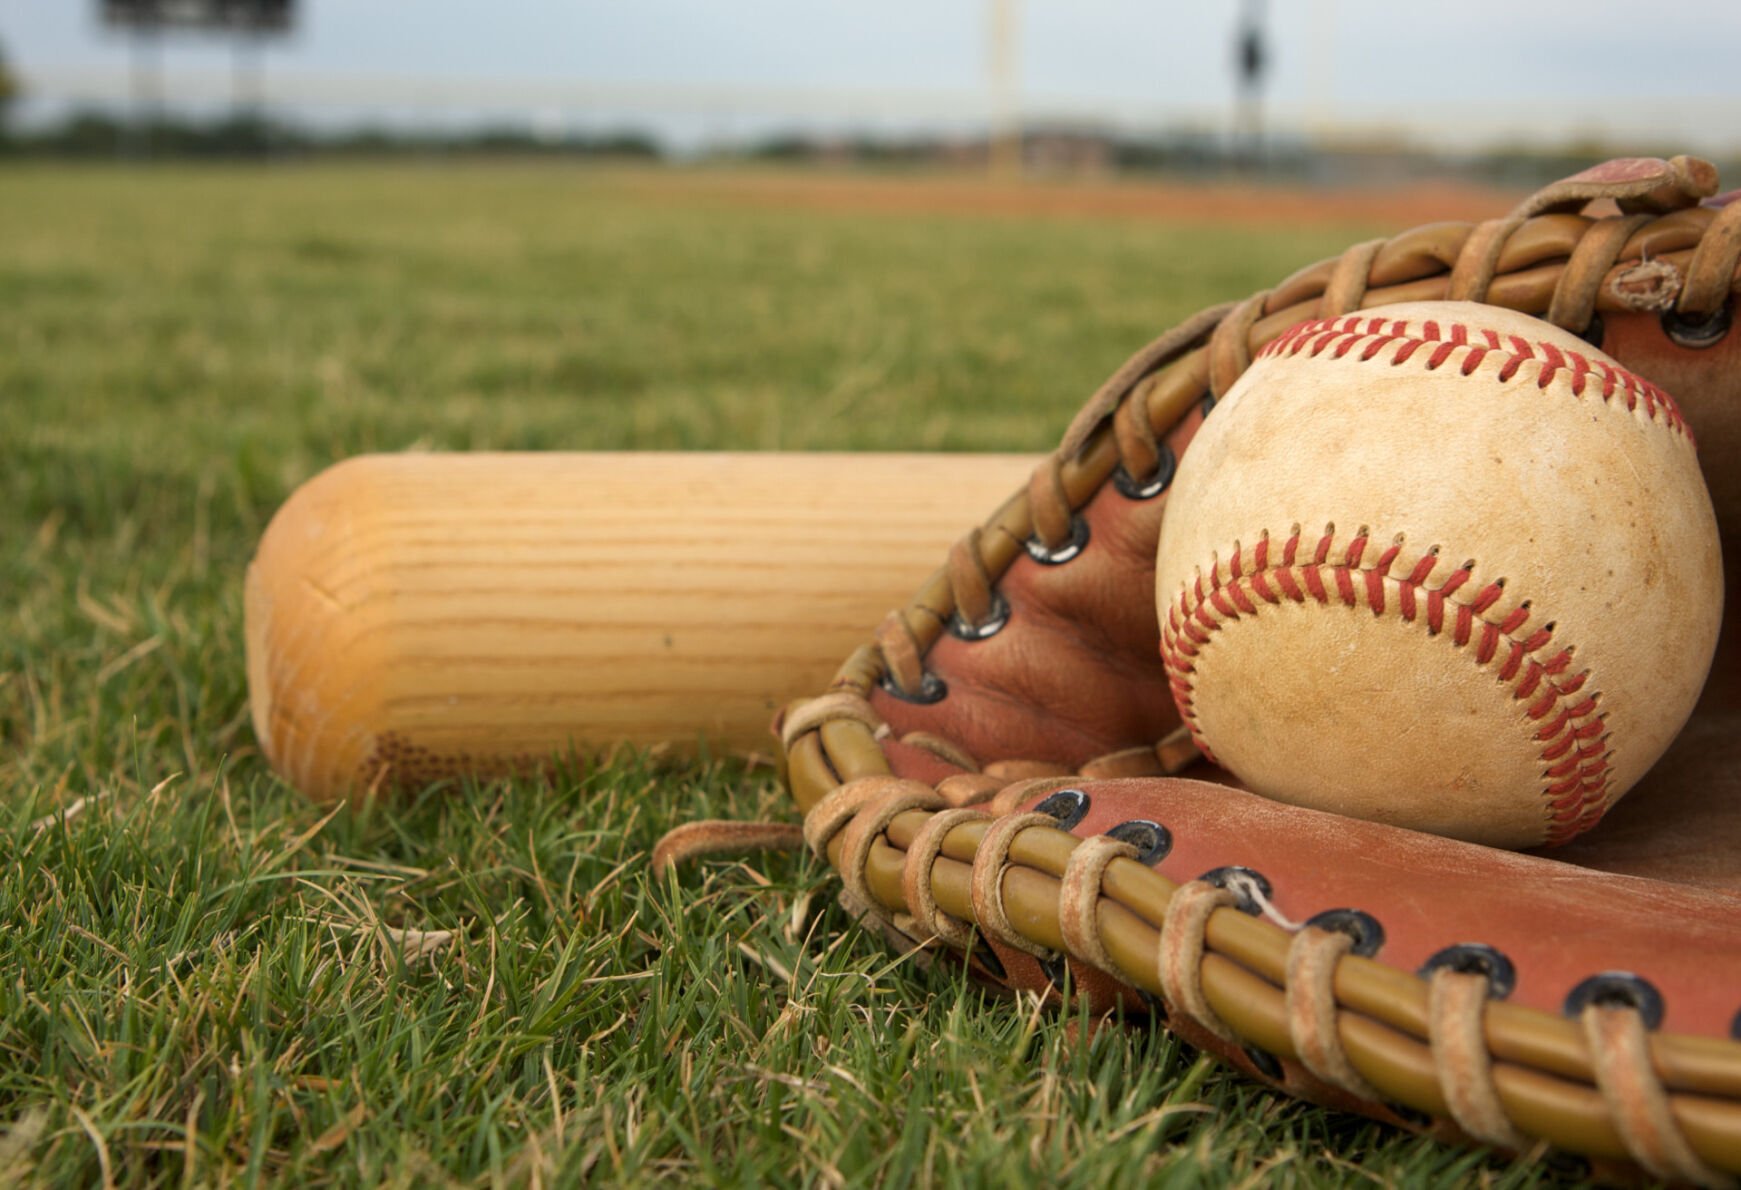 High school sports roundup: Horlick baseball team on winning streak, Waterford dominates in golf and tennis matches